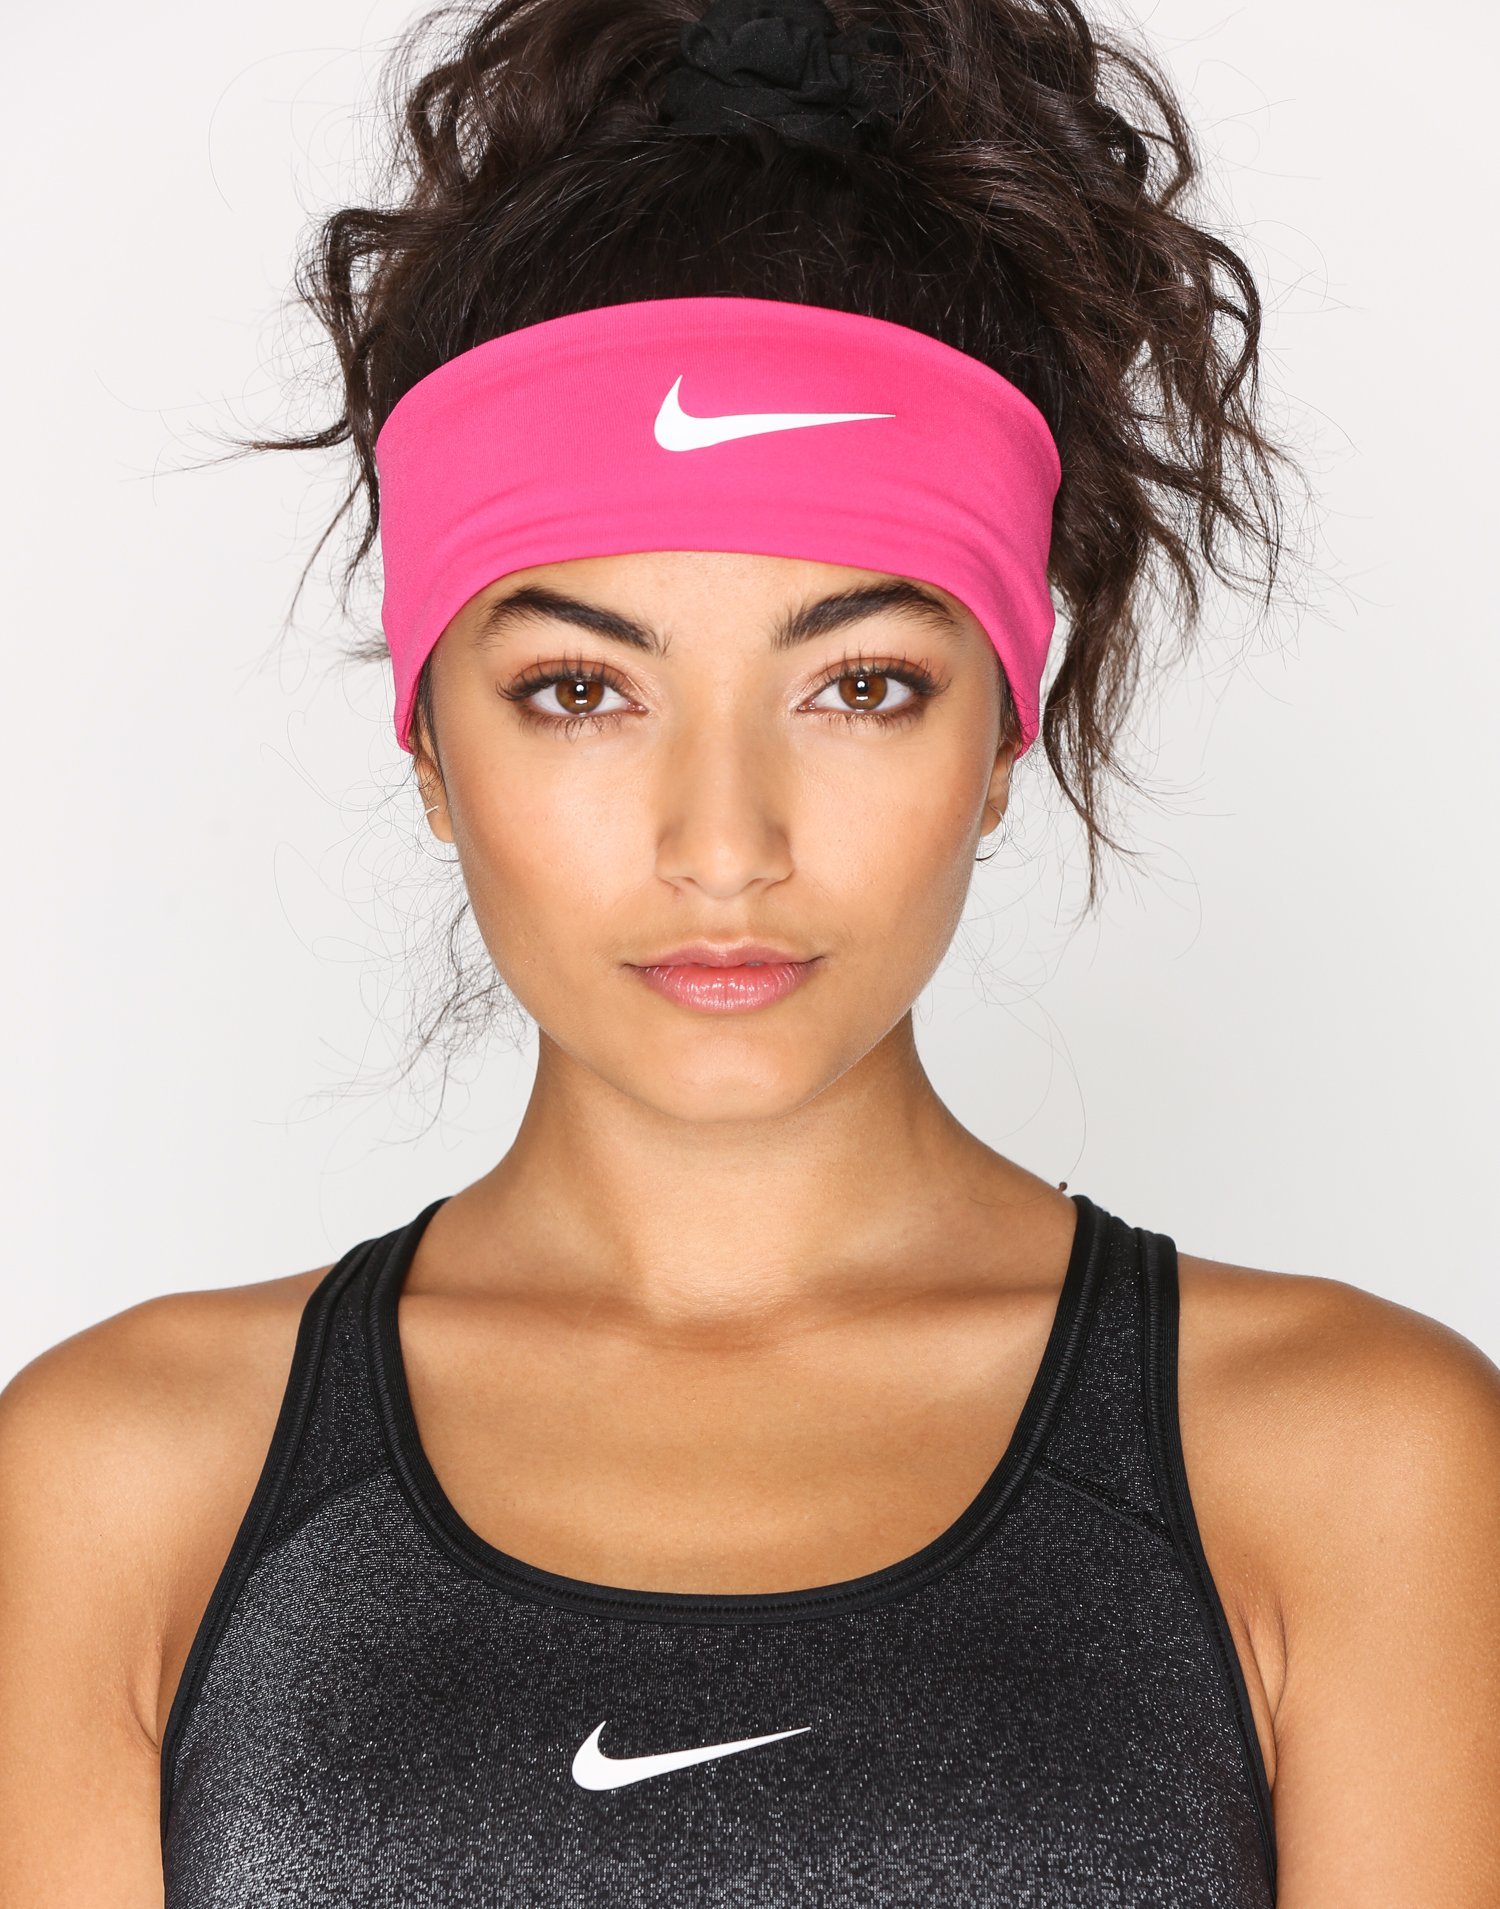 Nike Fury Headband 2,0 - Nike - Pink/White - Accessories (Sport ...